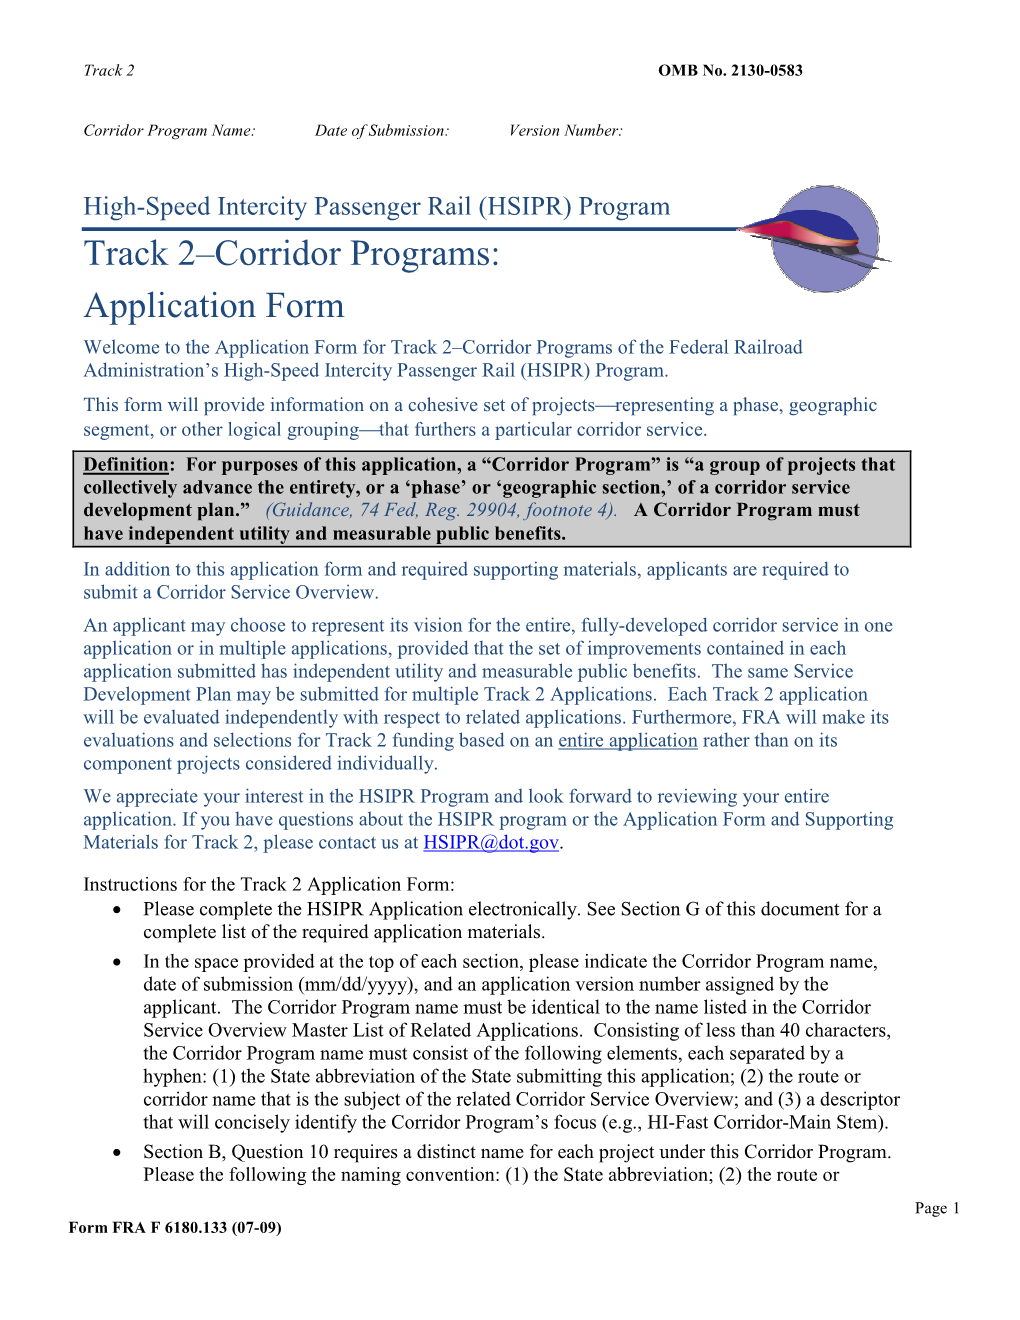 Corridor Programs: Application Form